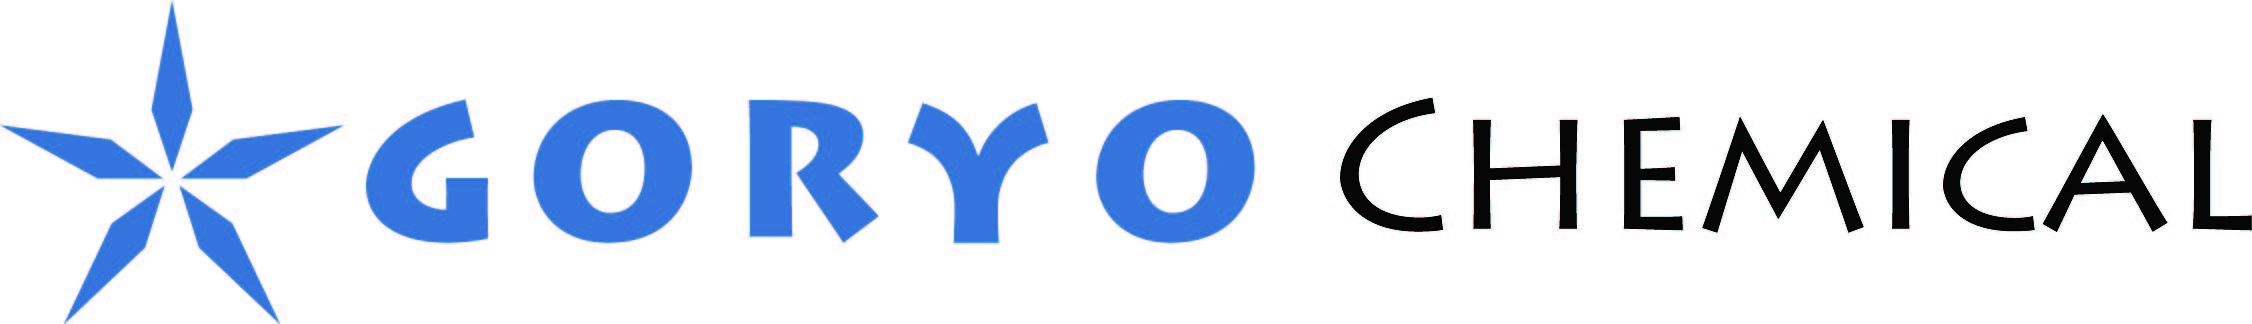 Goryo Chemical, Inc. 